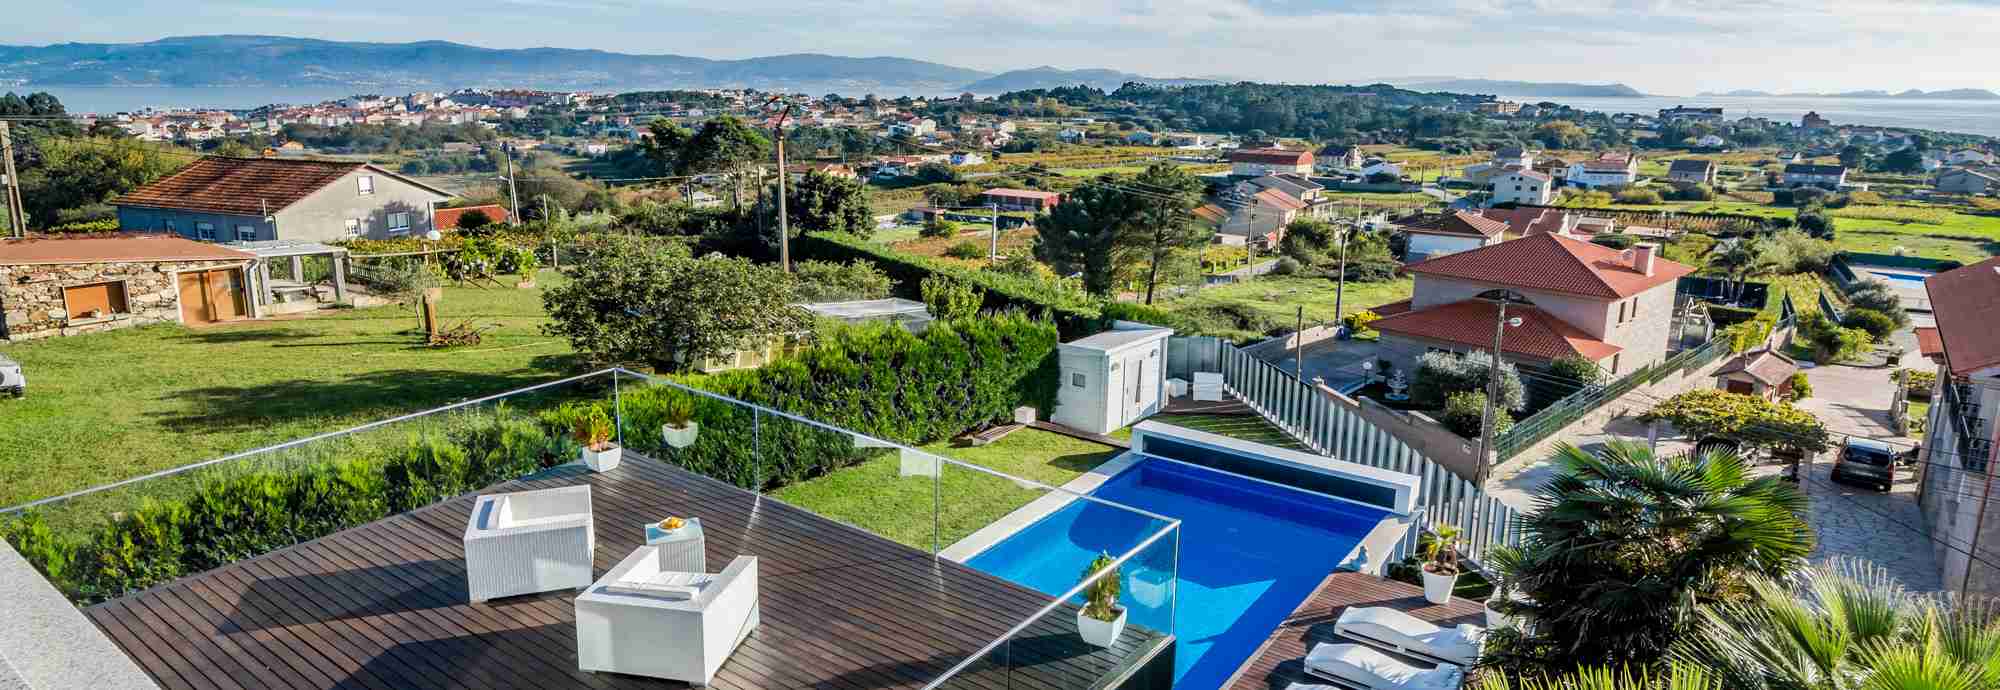 Luxury ocean villa walking distance to beach and gastro heart of Galicia